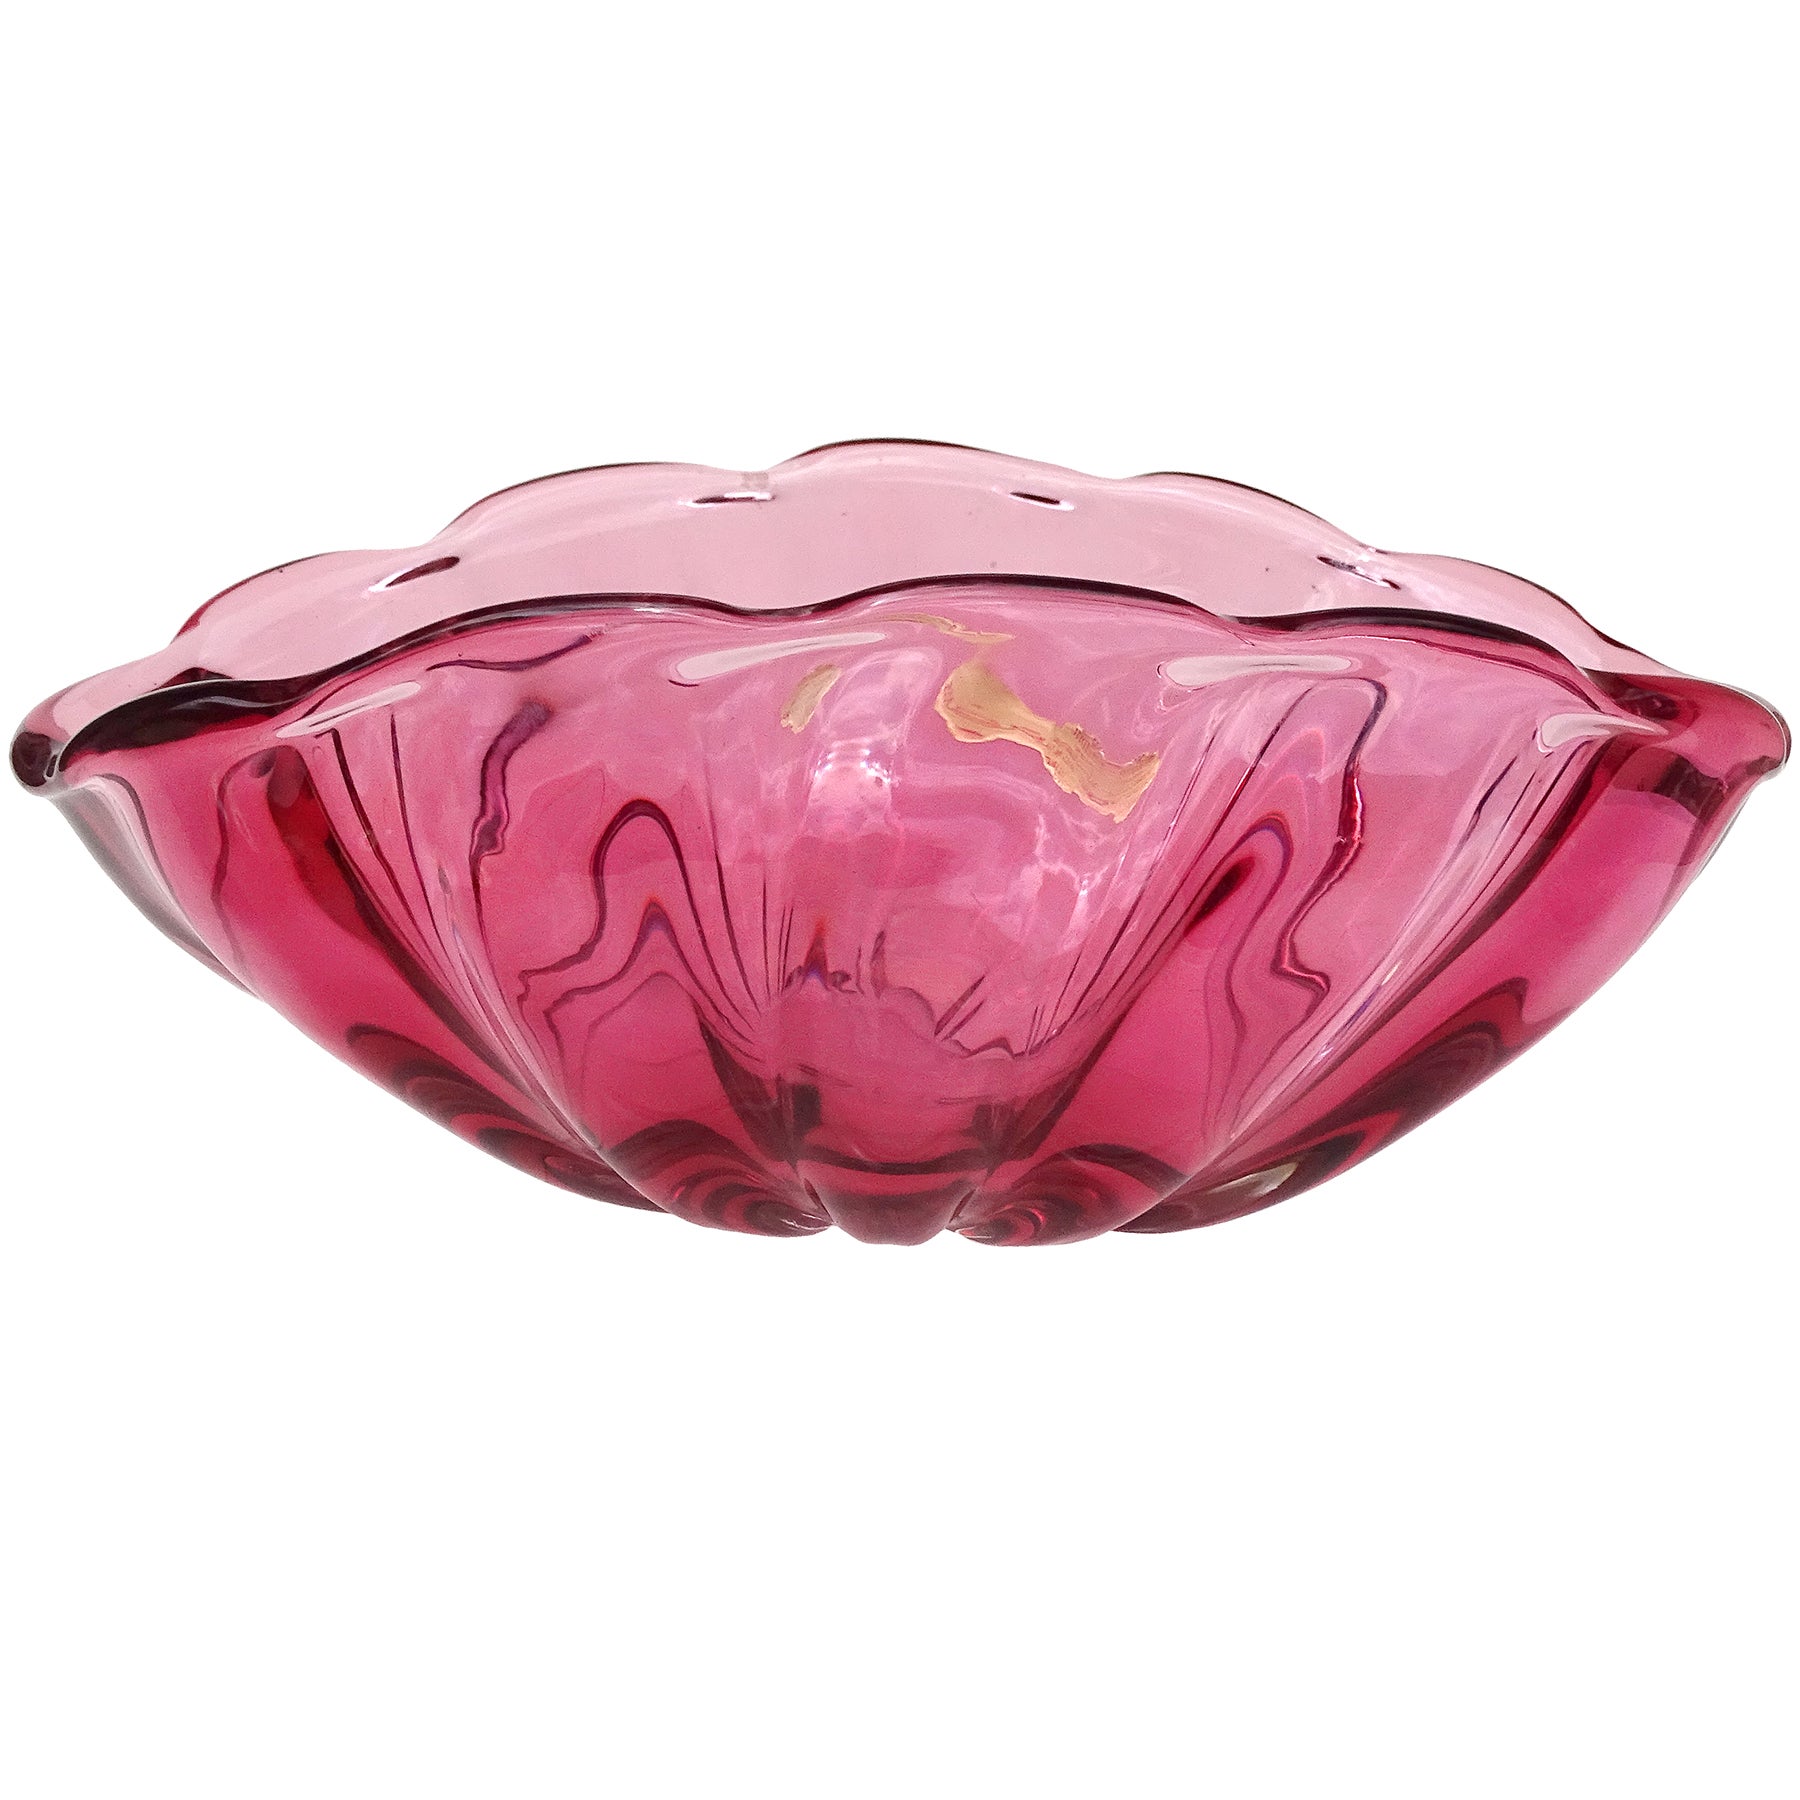 Alfredo Barbini Murano Sommerso Pink Italian Art Glass Fruit Bowl Centerpiece For Sale